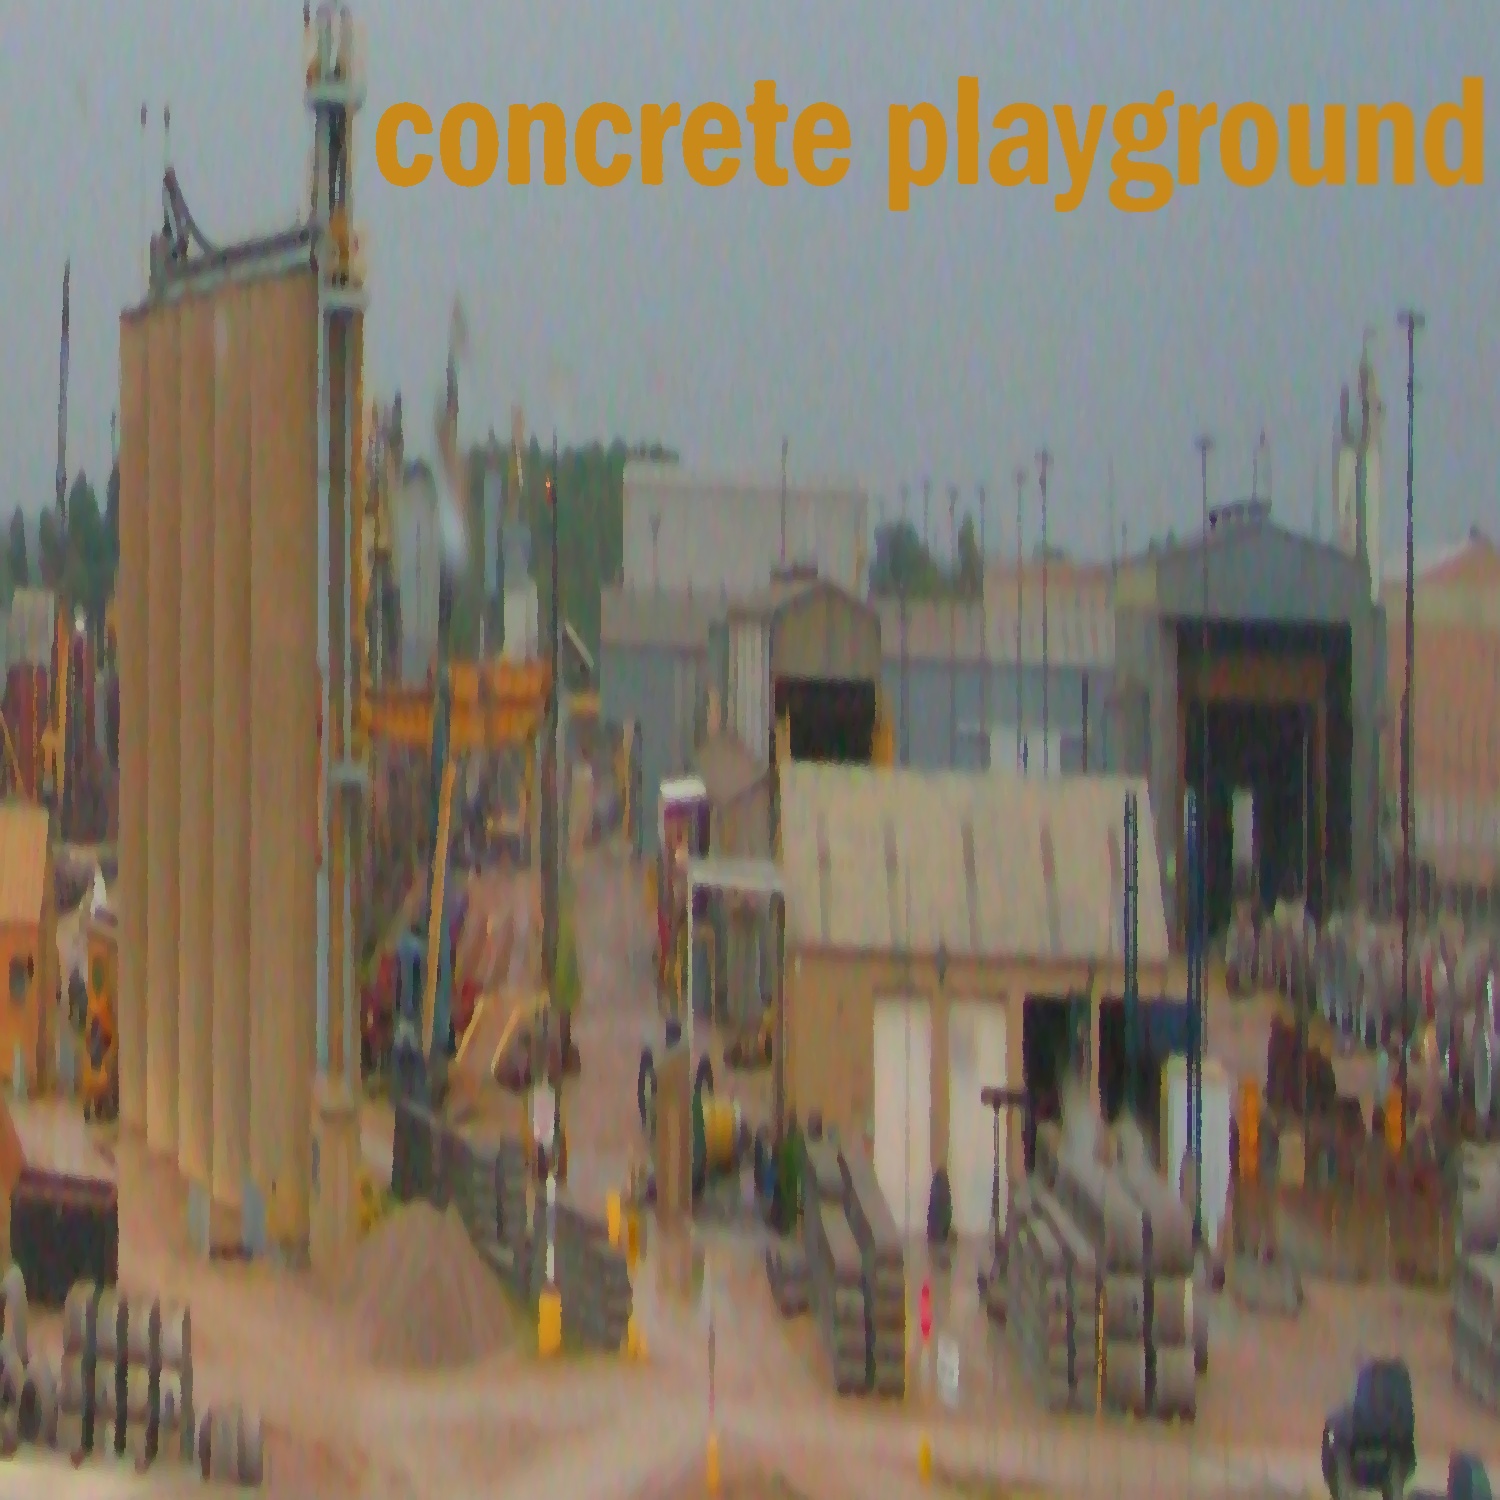 Famous Album Covers: concrete playground